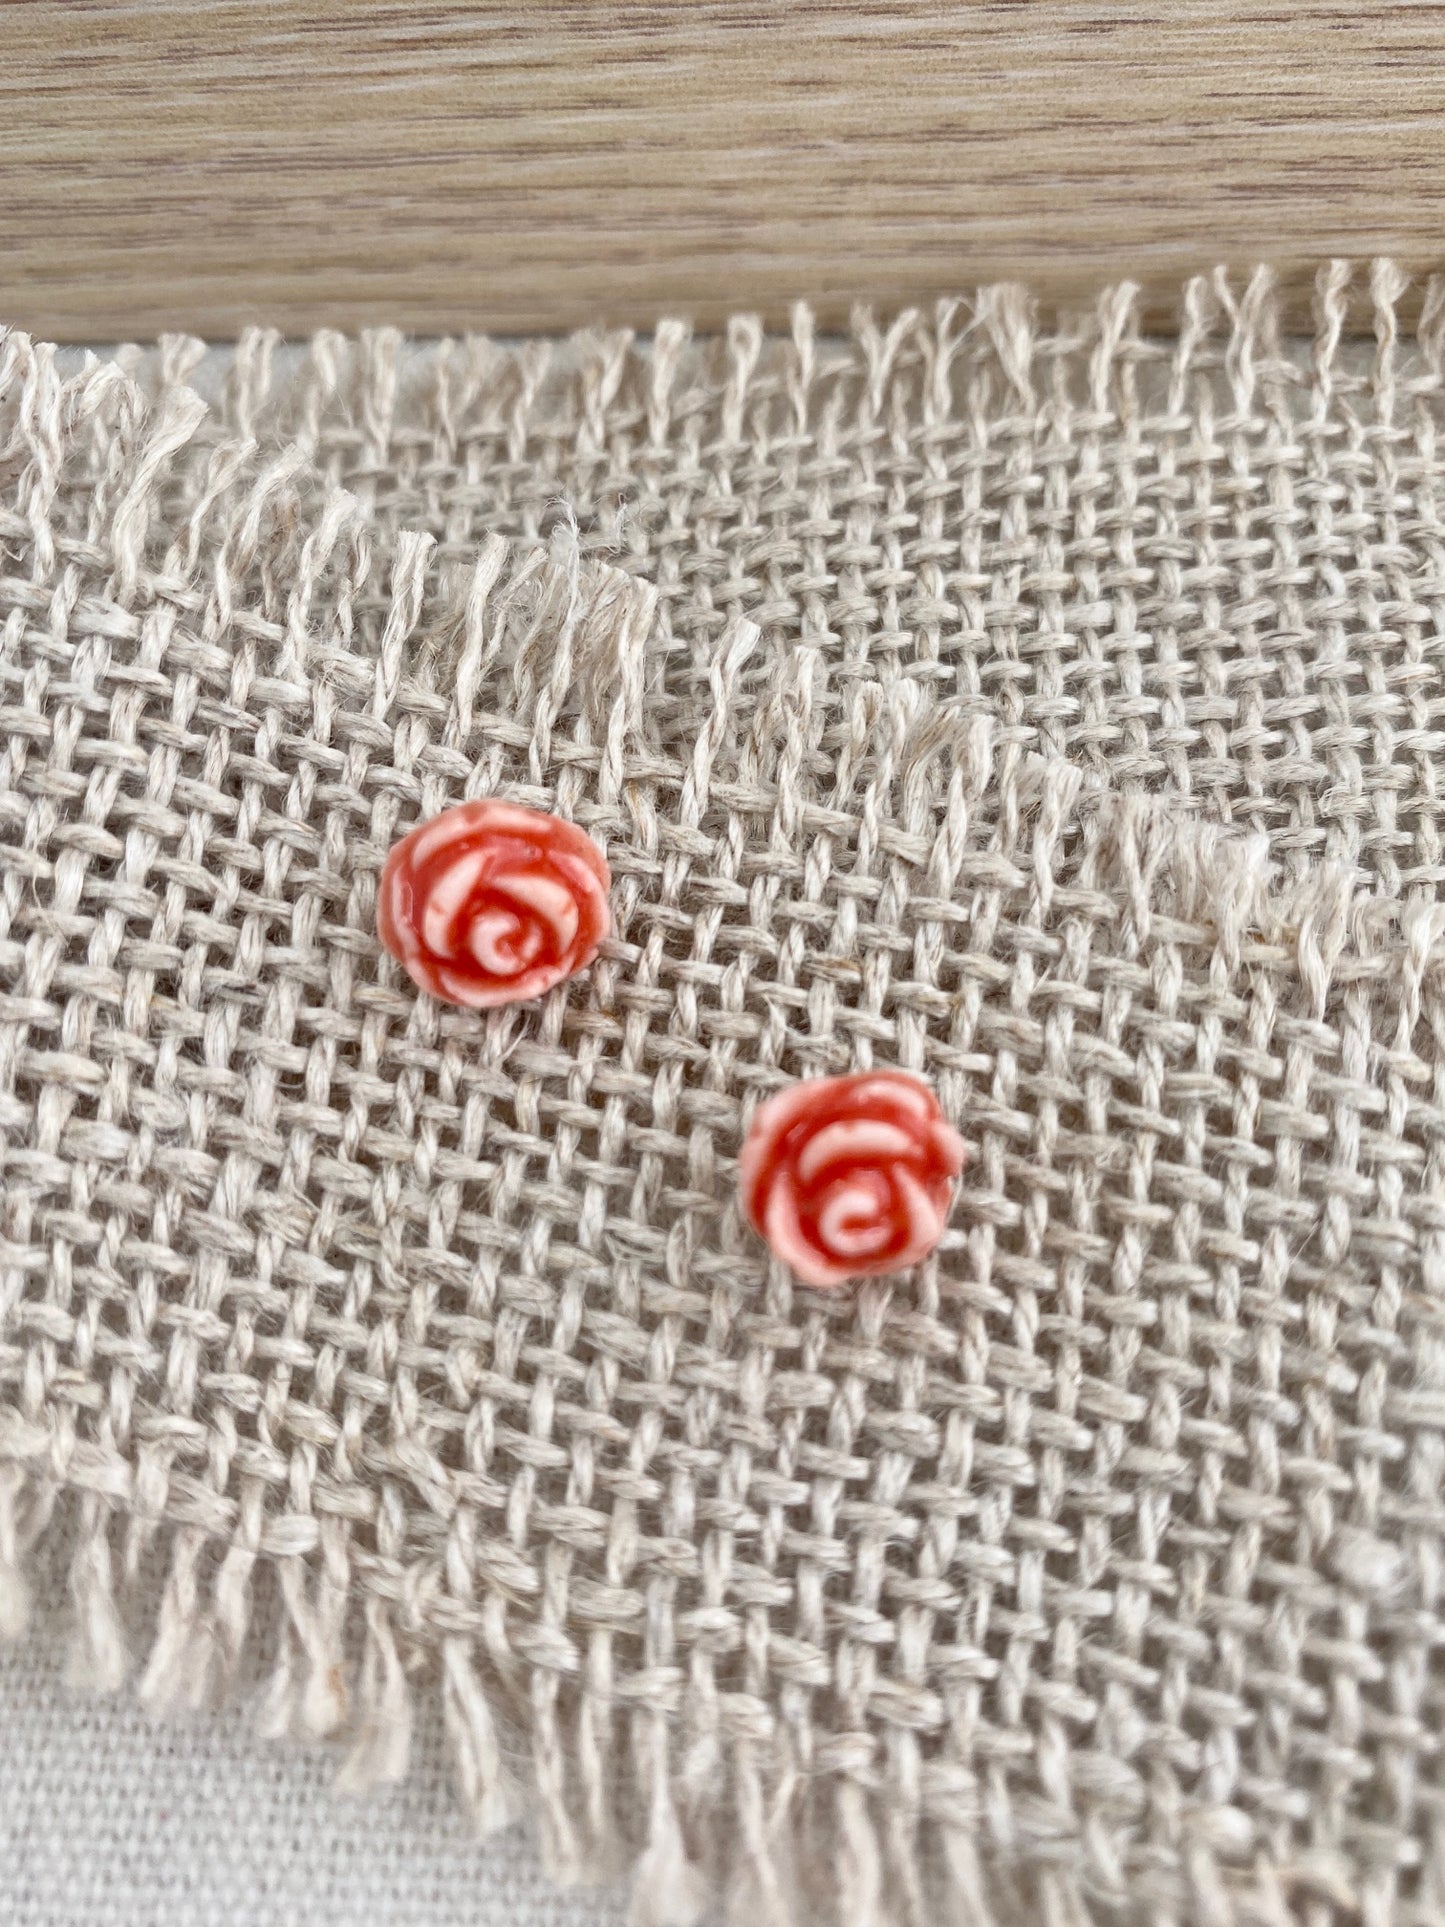 Rose Earring - small, delicate, porcelain